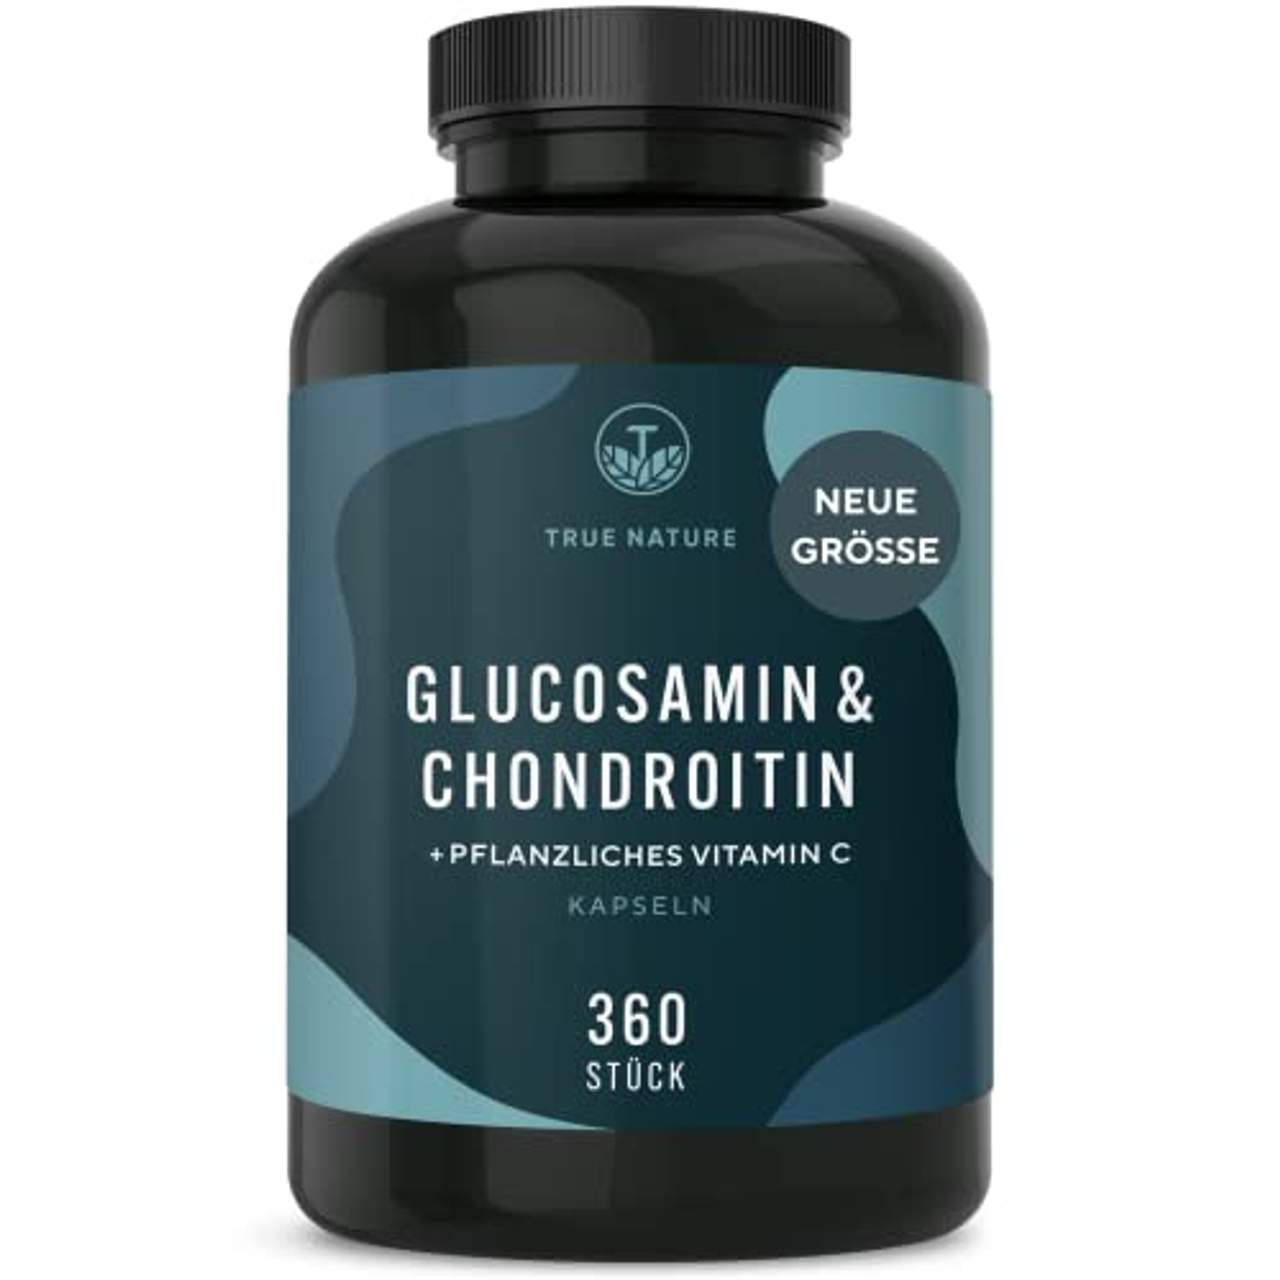 TRUE NATURE Glucosamin & Chondroitin Hochdosiert